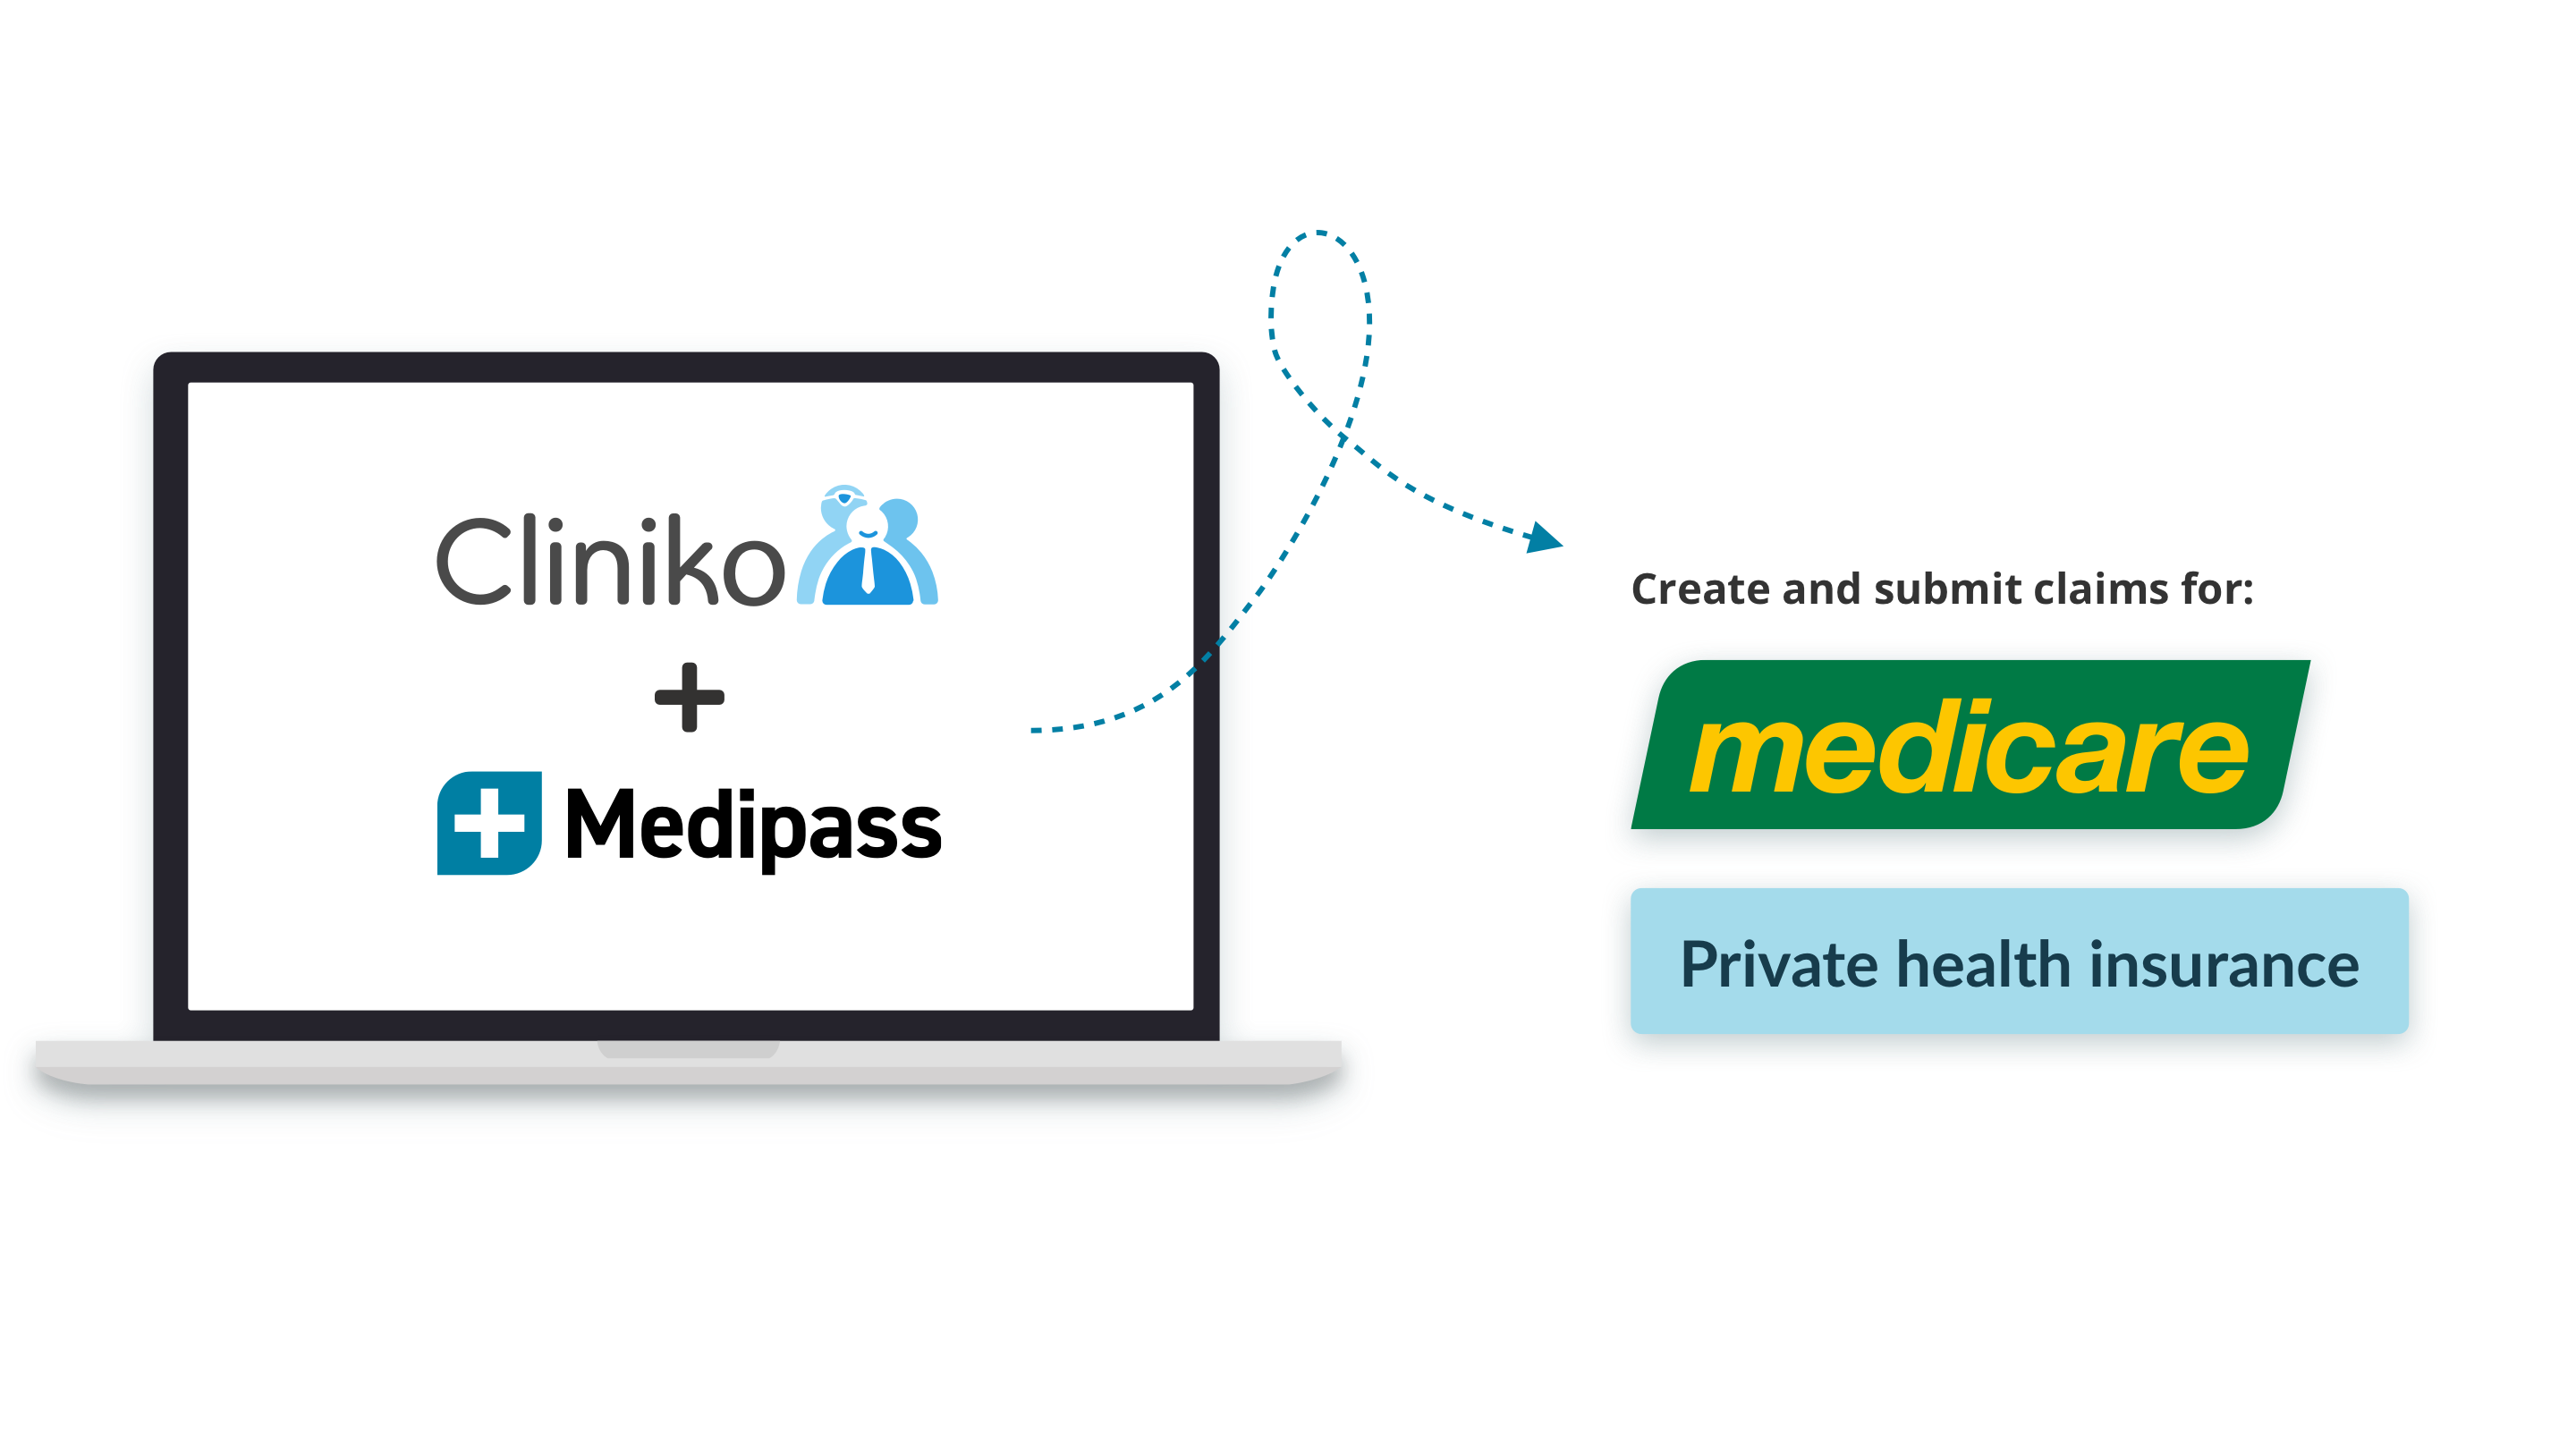 Medipass and Cliniko logos